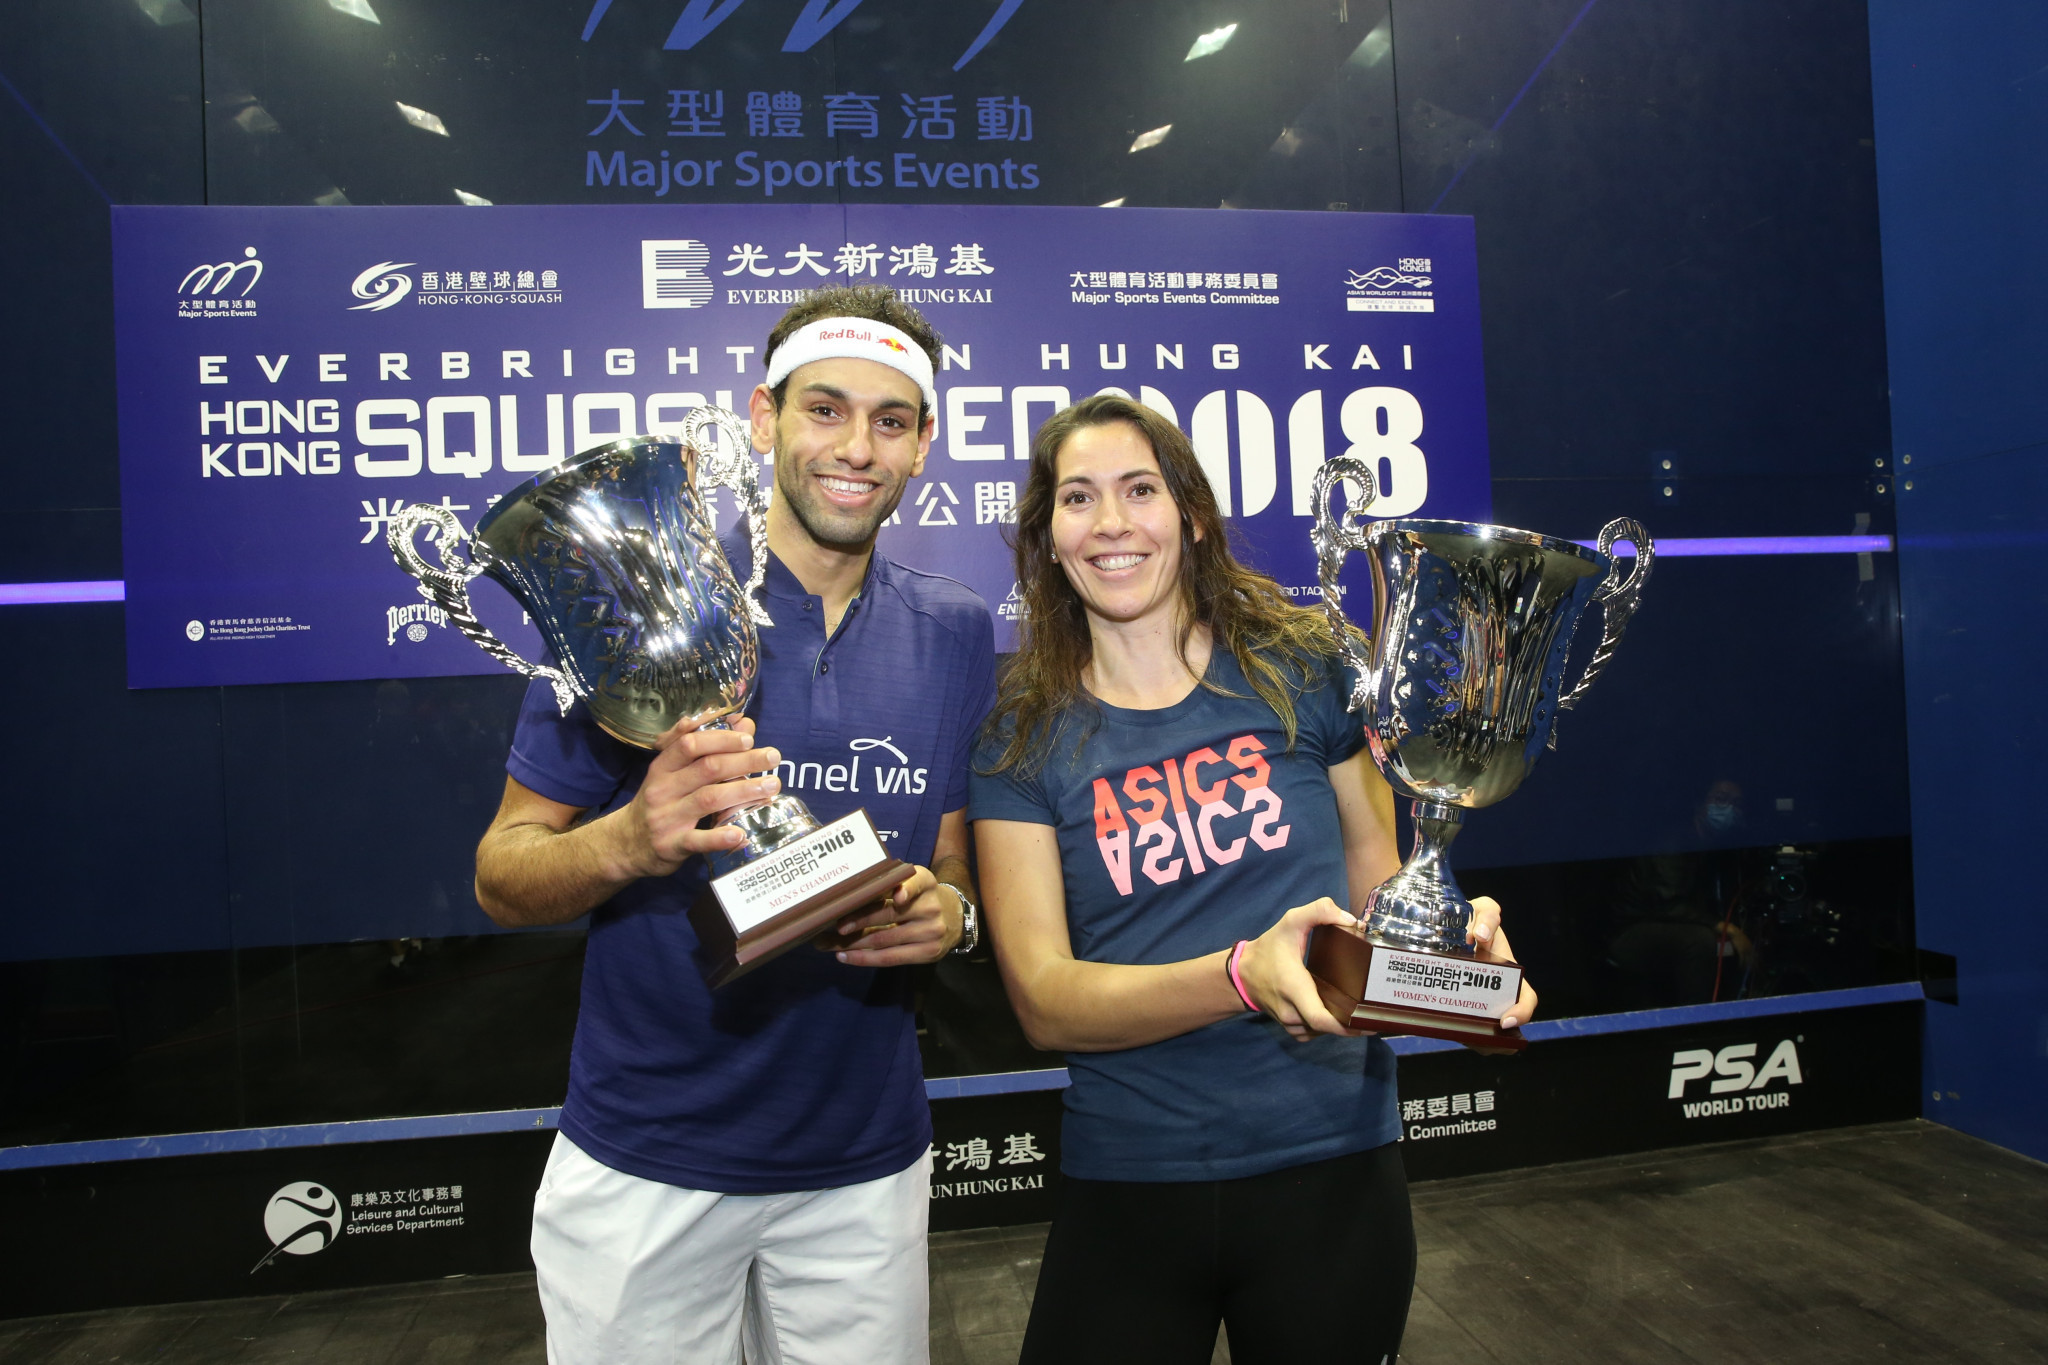 PSA confirms postponement of Hong Kong Squash Open for third consecutive year